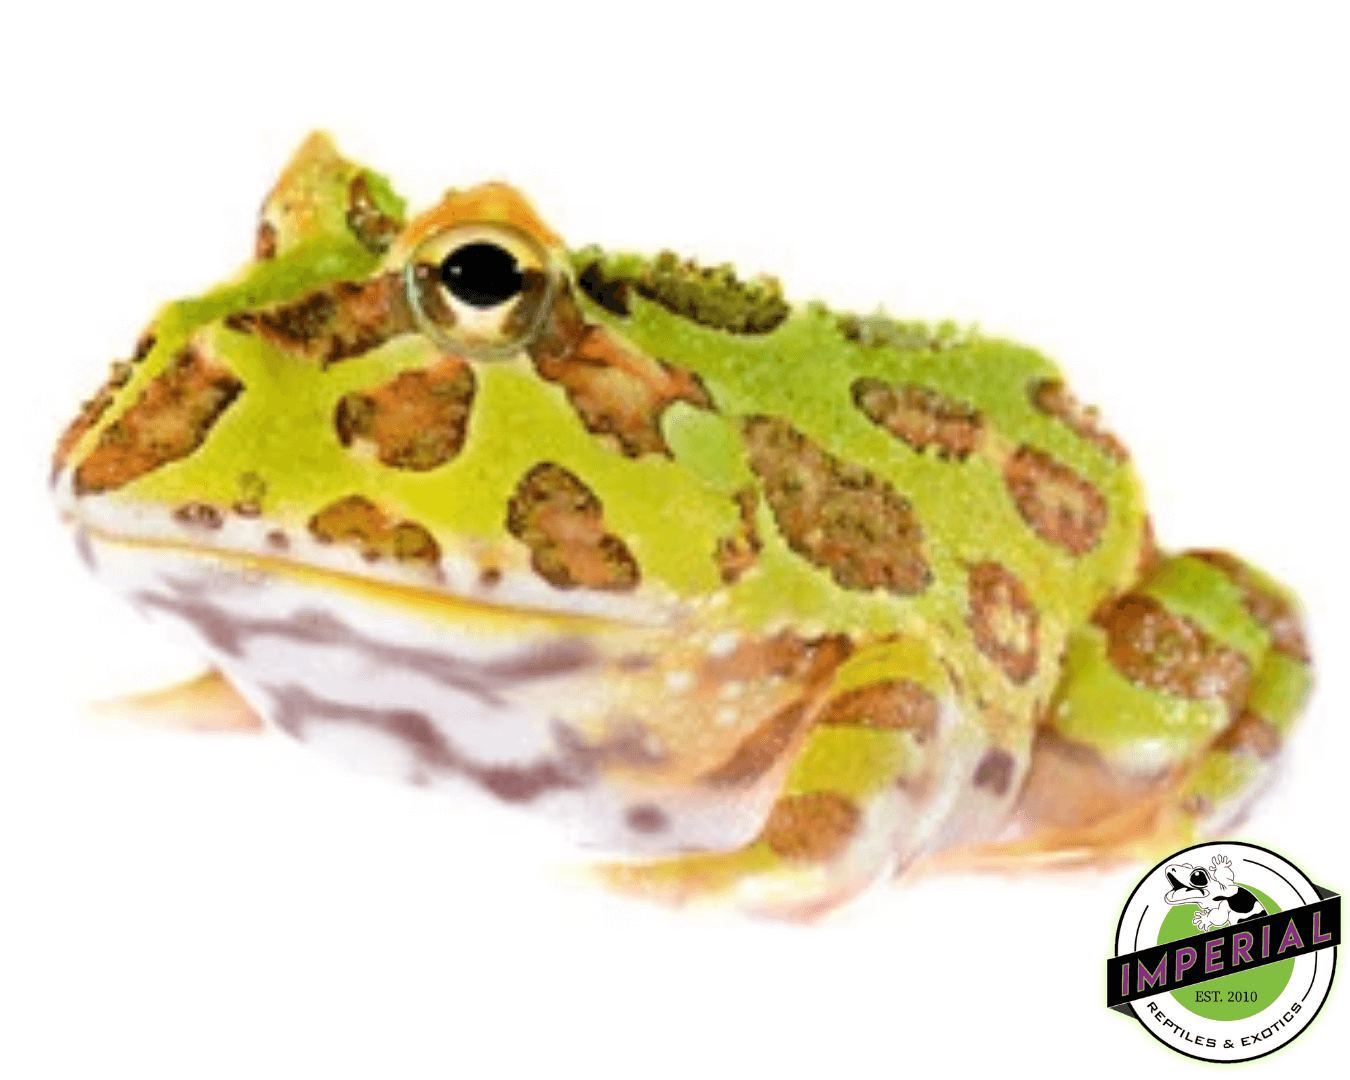 green pacman frog for sale, buy amphibians online